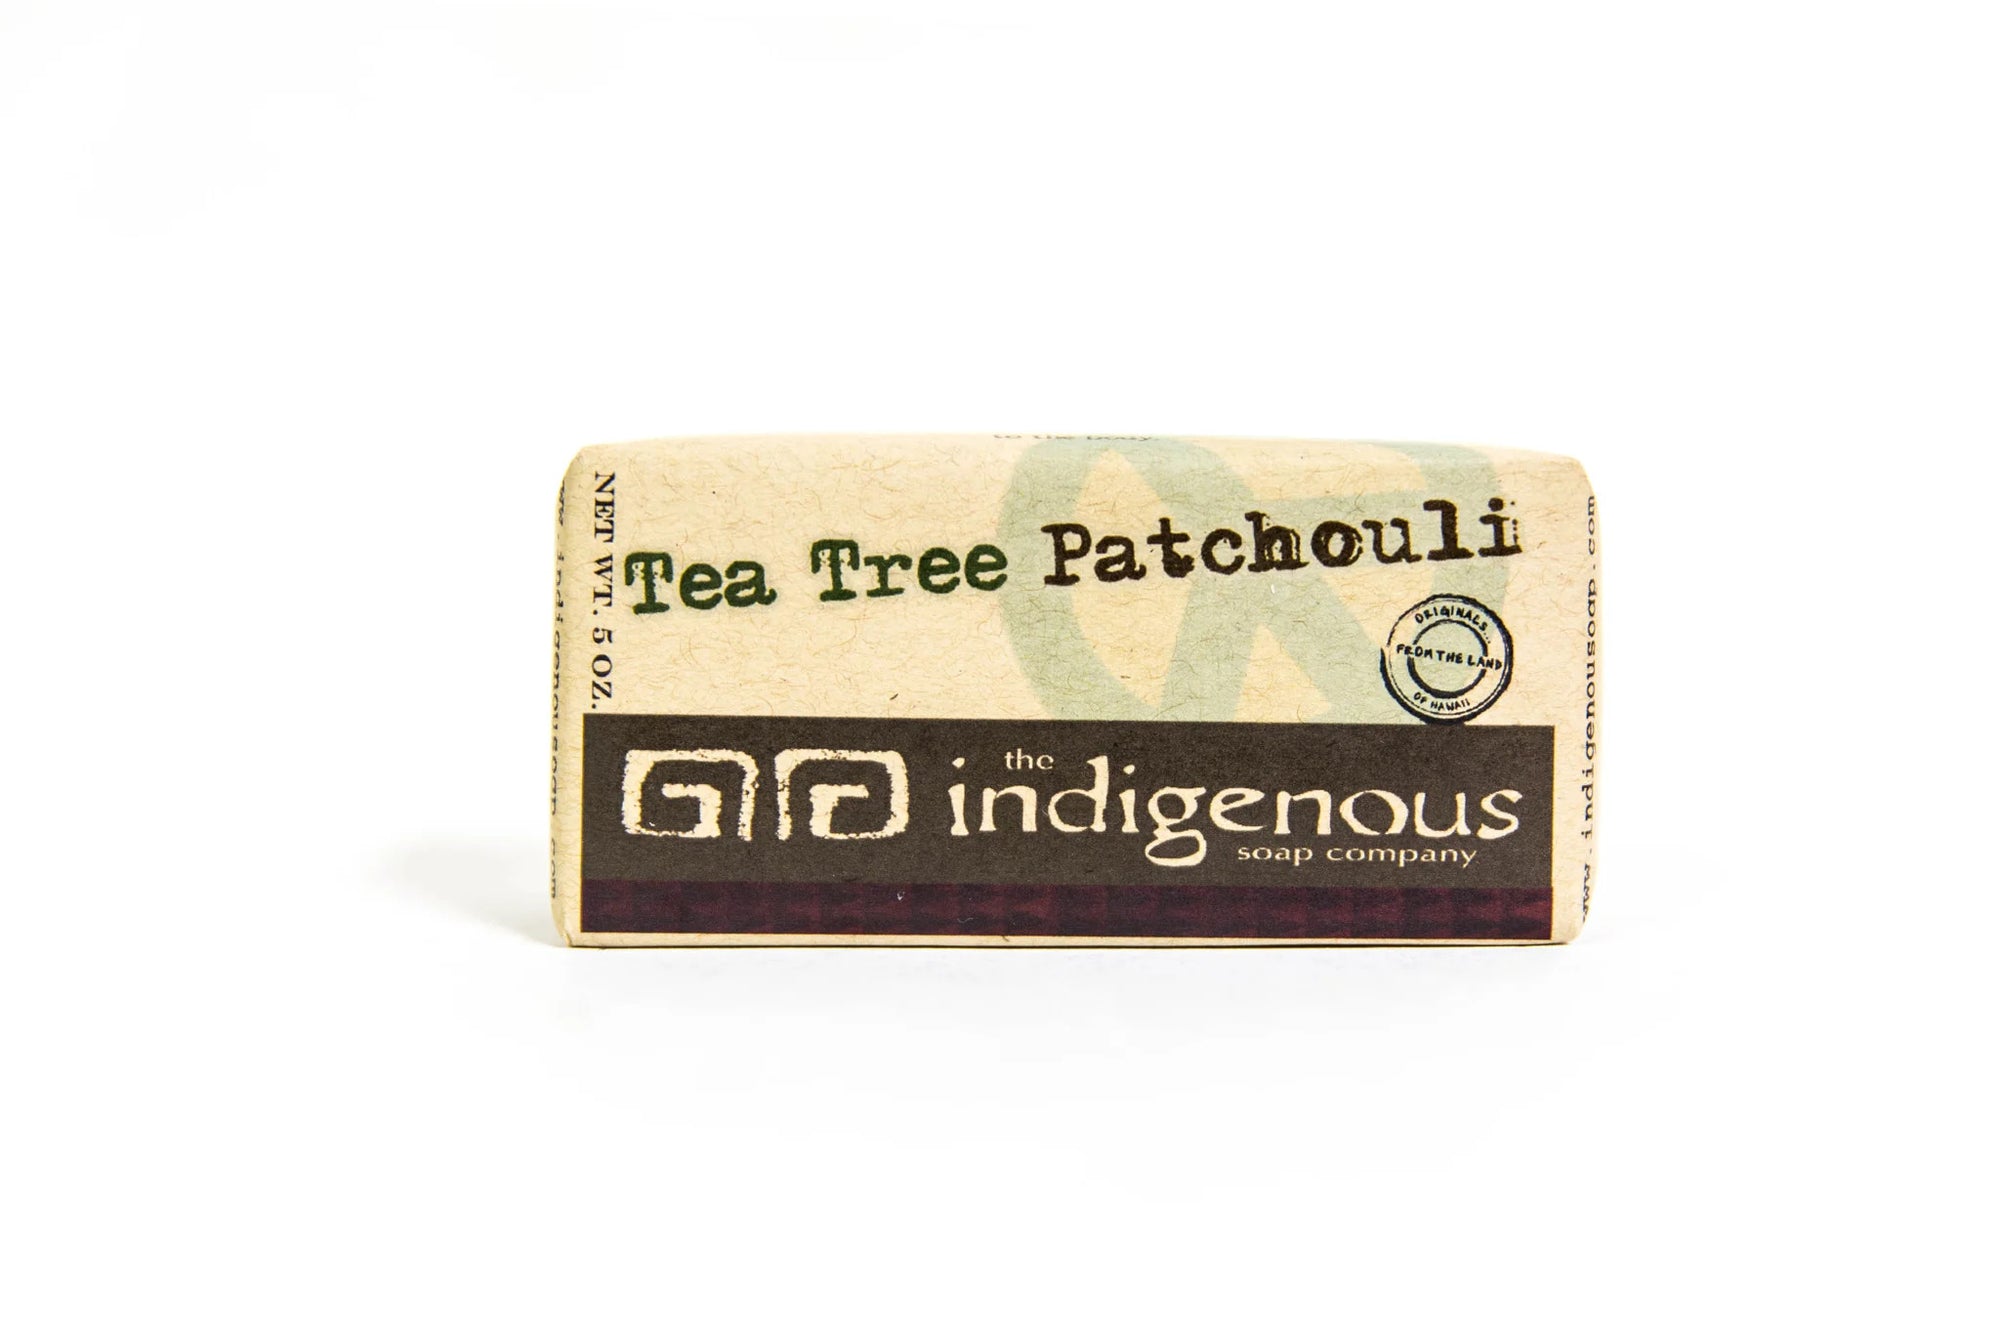 Pop-Up Mākeke - The Indigenous Soap Company - Tea Tree Patchouli Soap Bar